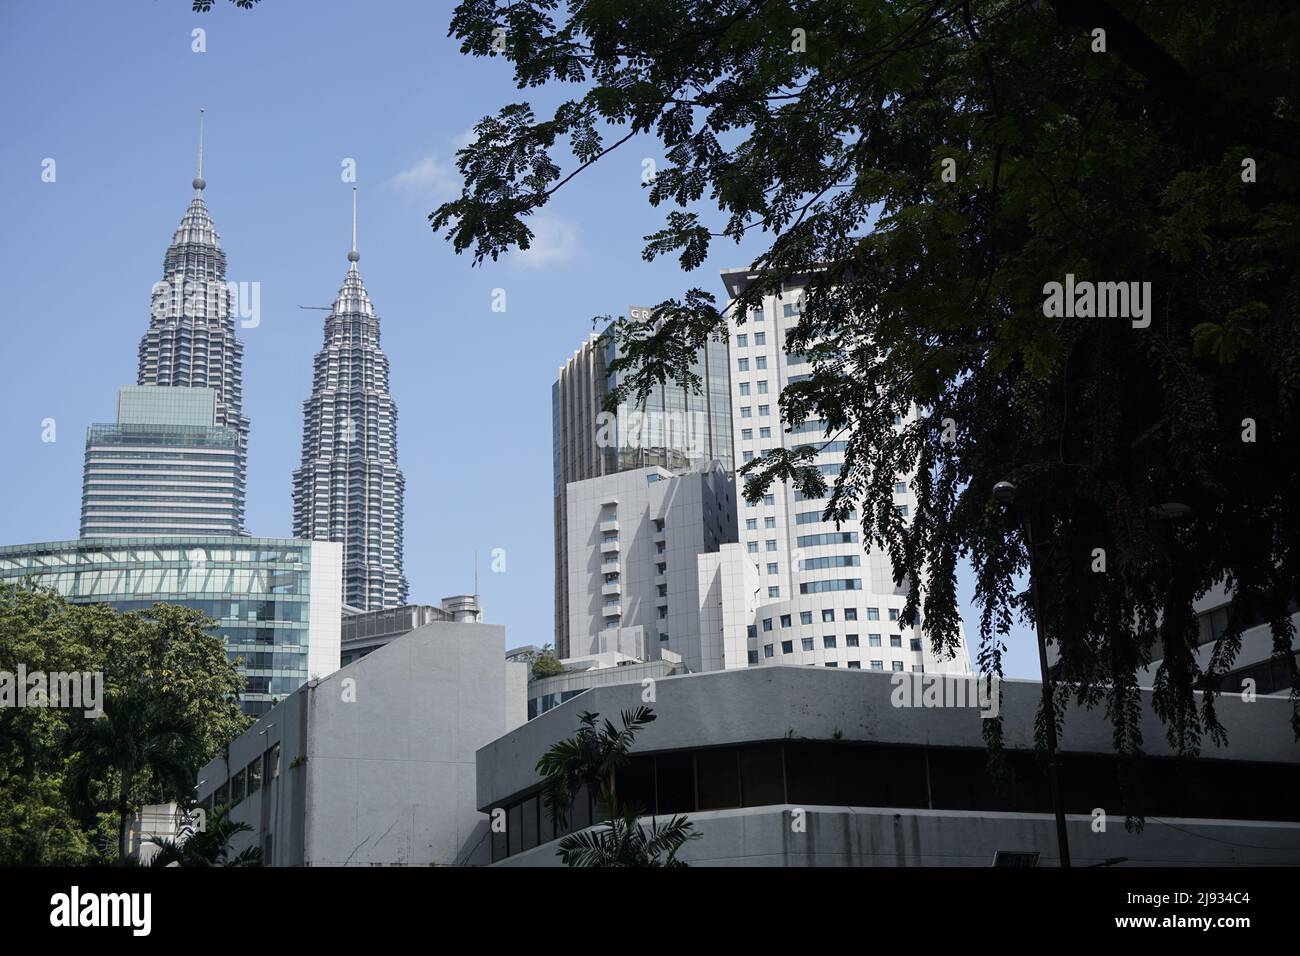 Petronas Twin Towers and office buildings in Kuala Lumpur, Malaysia Stock Photo